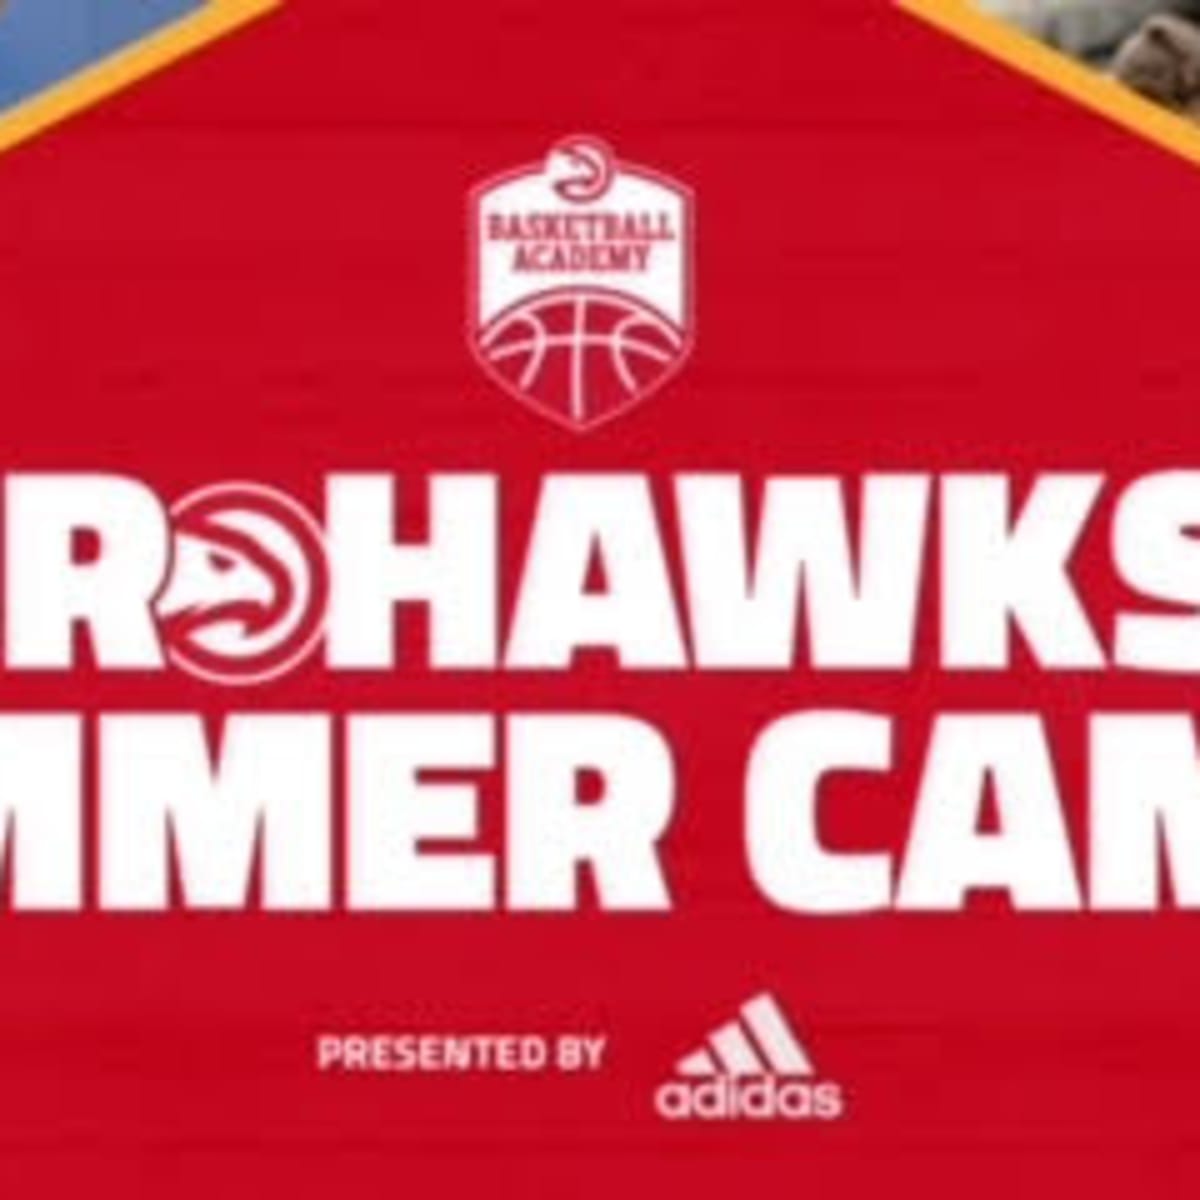 Hawks hosting youth basketball academy throughout metro Atlanta